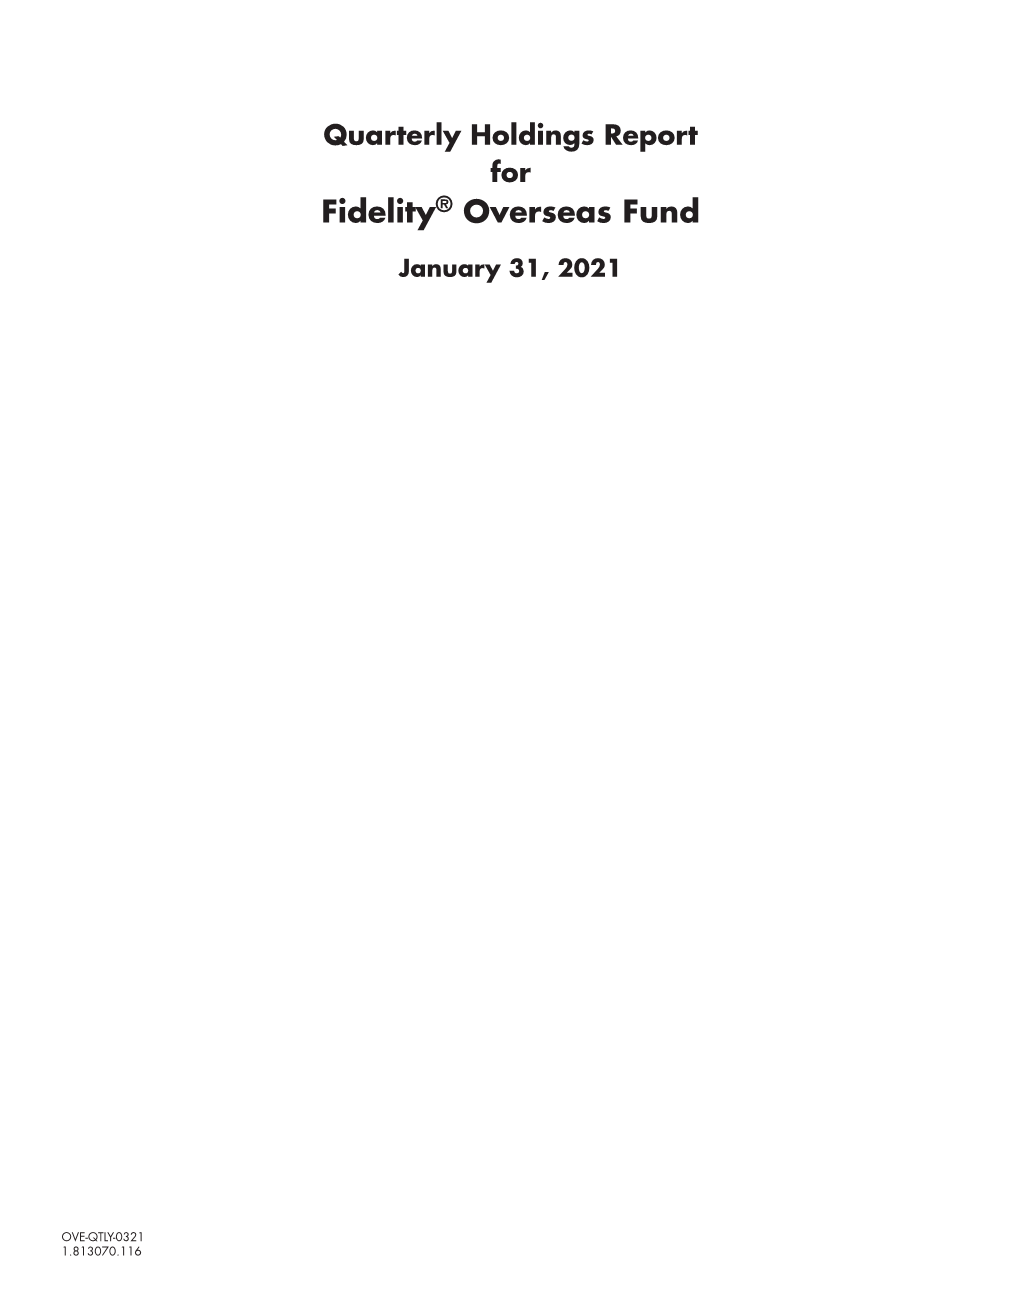 Fidelity® Overseas Fund